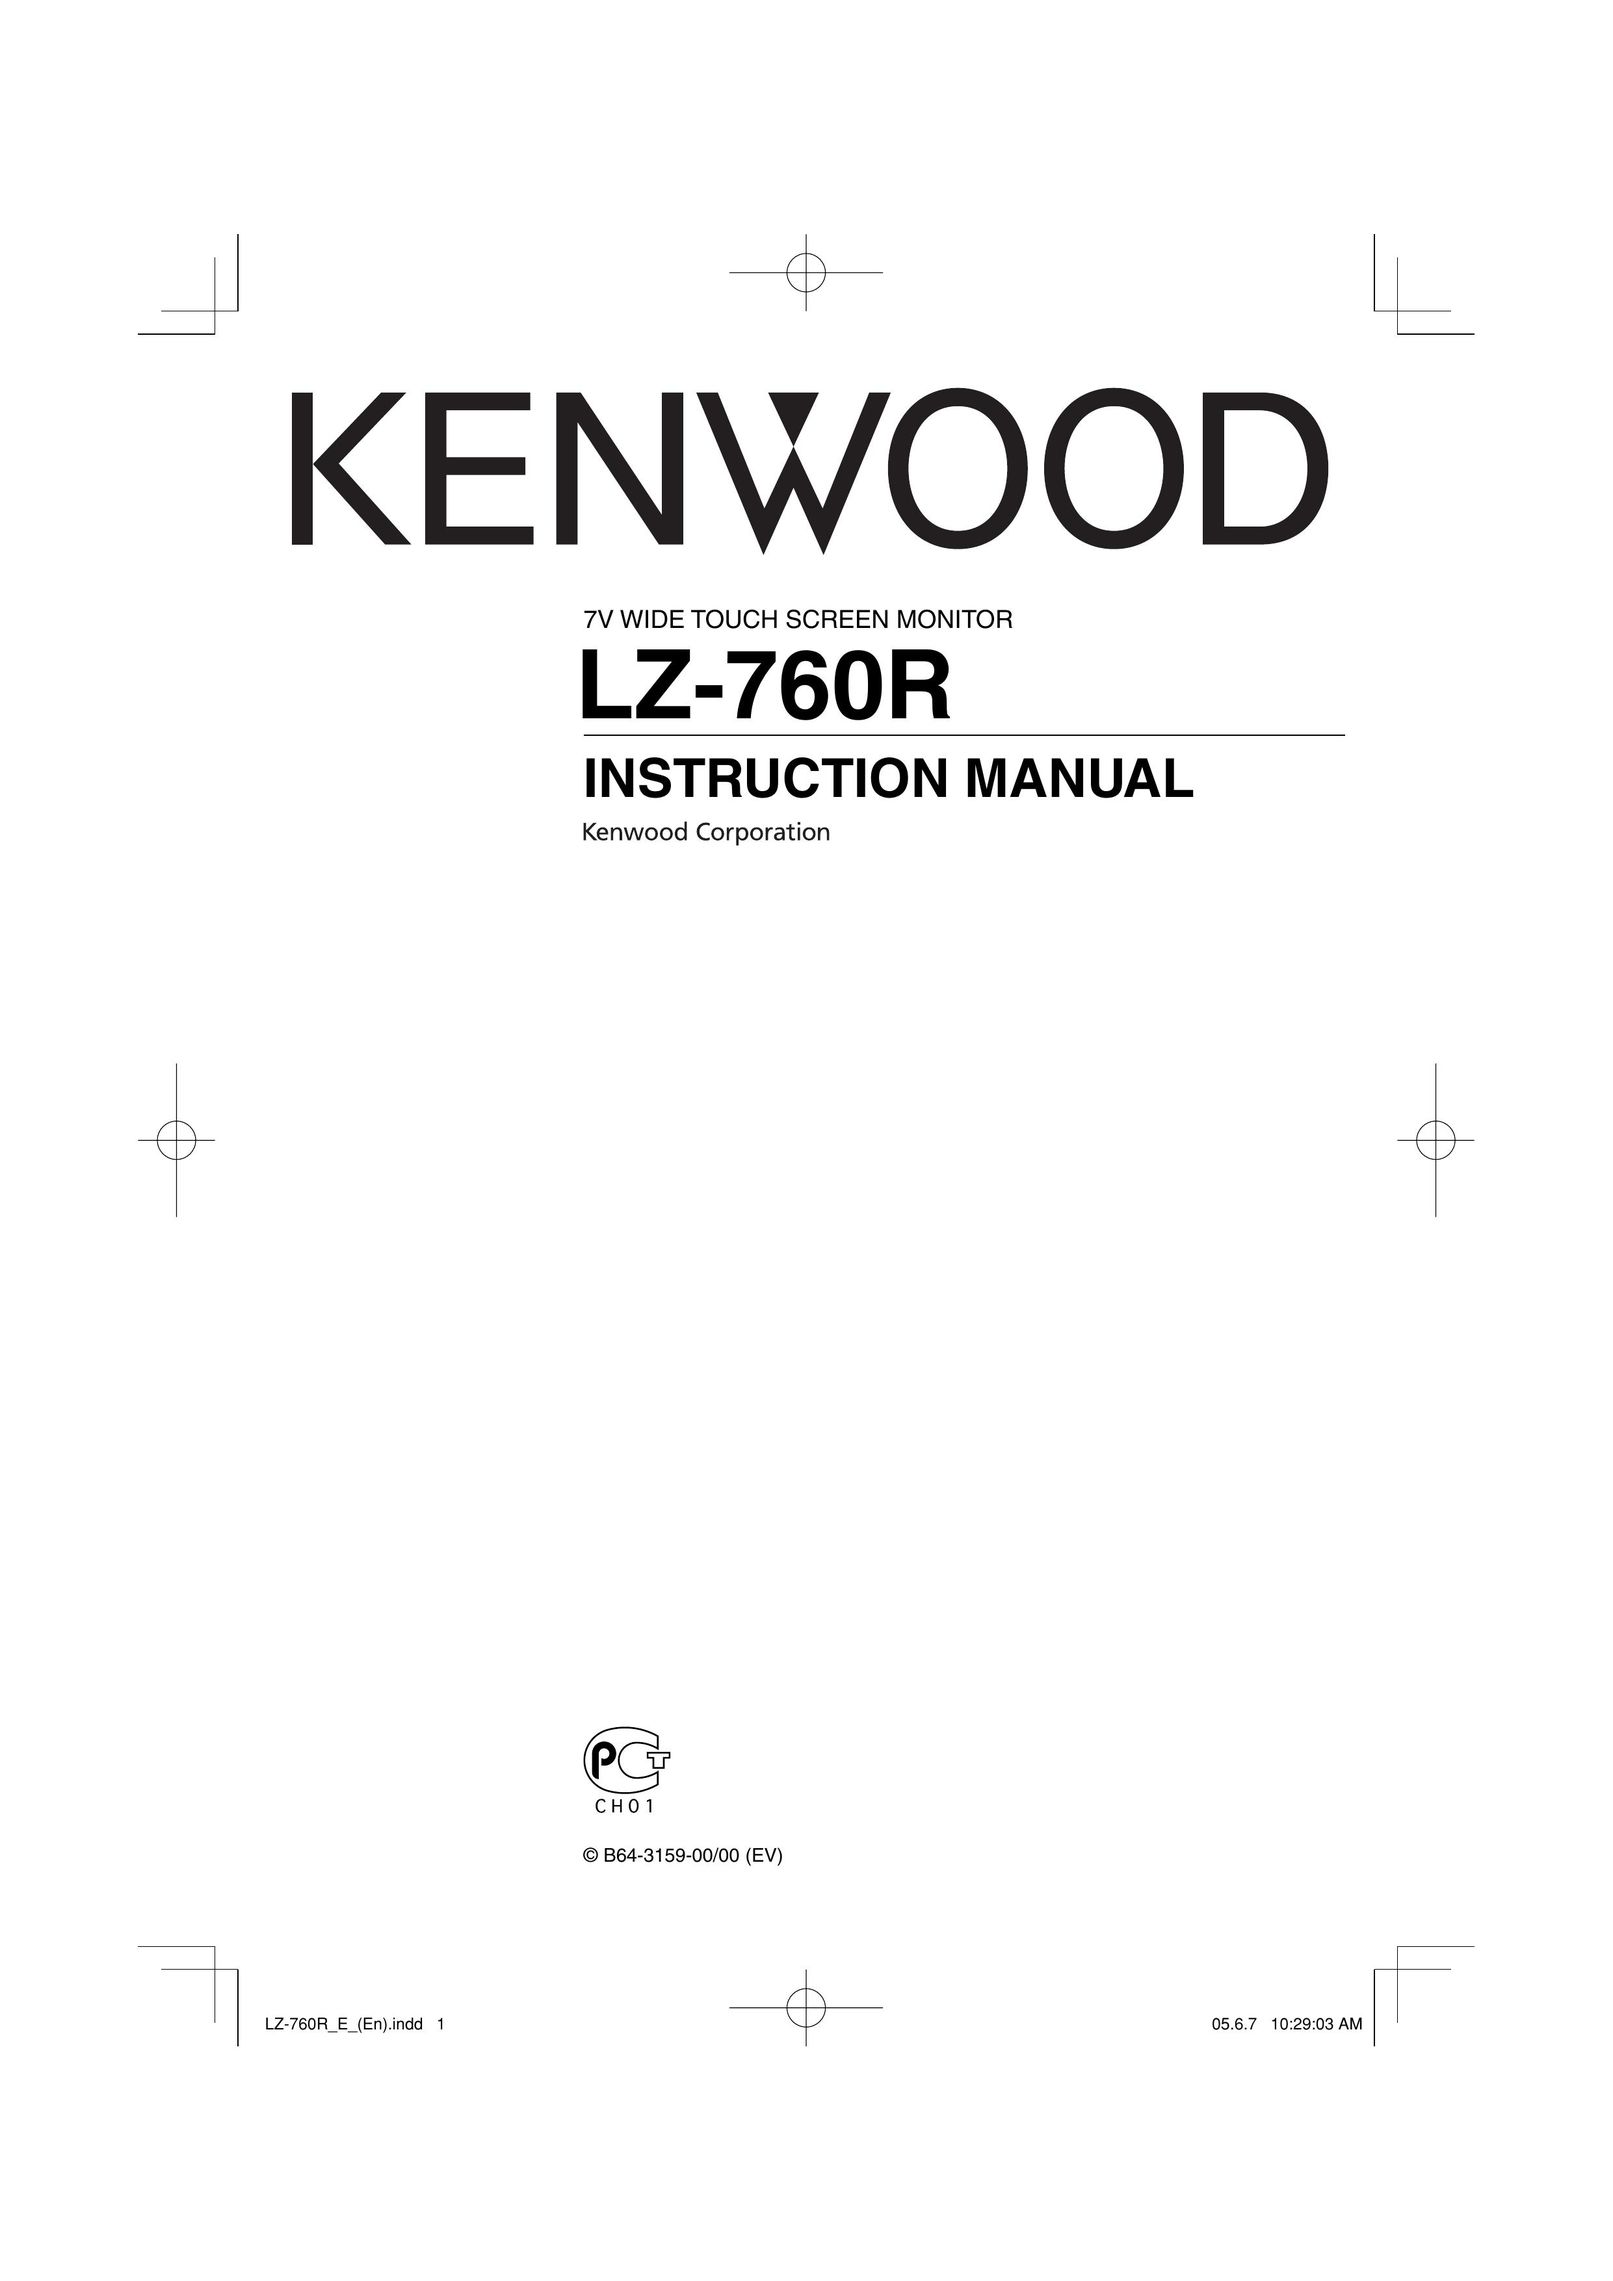 Kenwood LZ-760R Computer Monitor User Manual